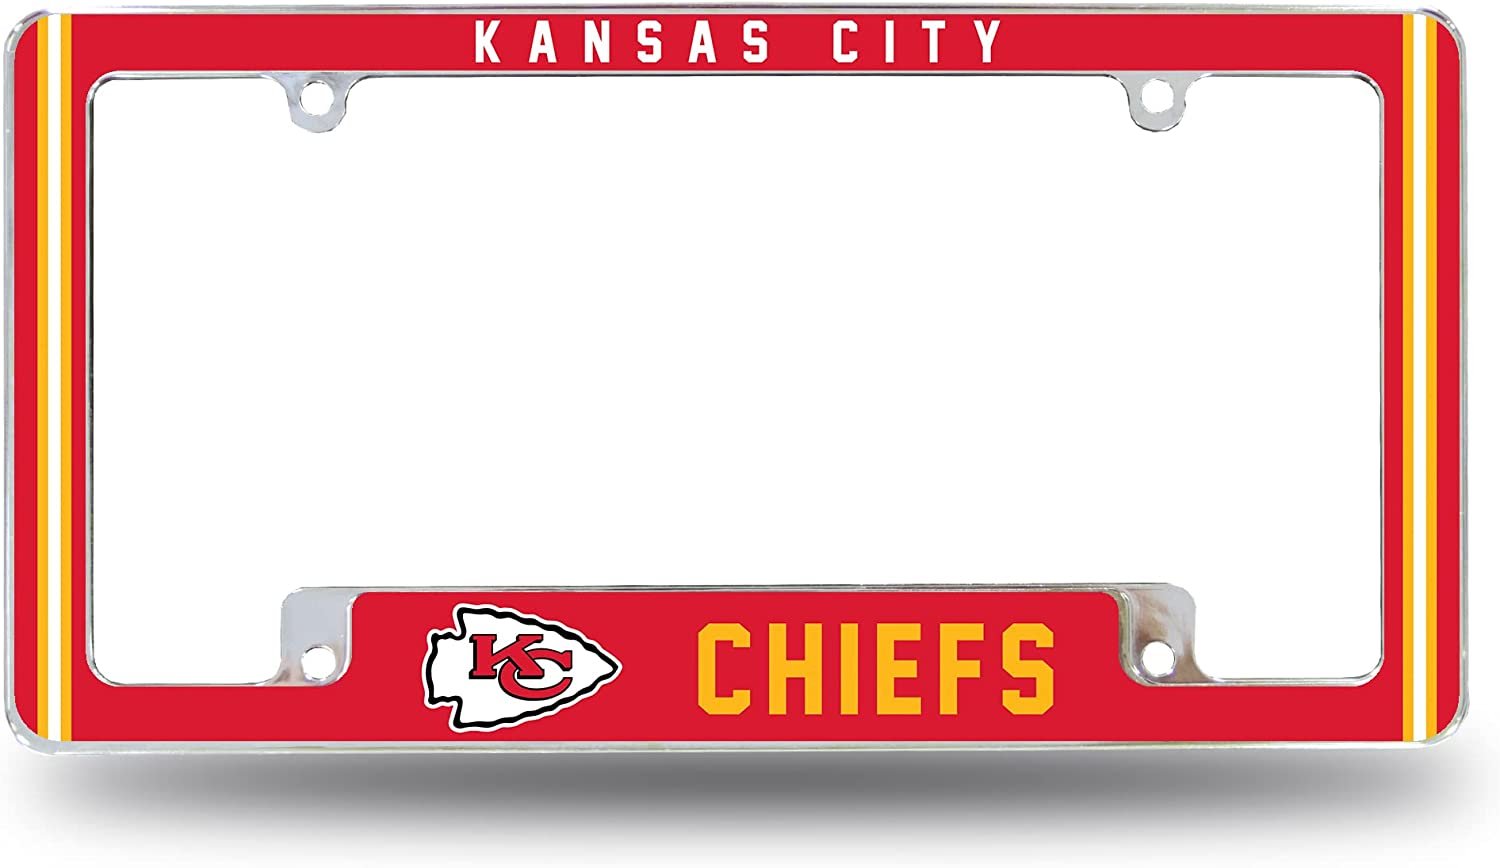 Kansas City Chiefs Metal License Plate Frame Chrome Tag Cover Alternate Design 6x12 Inch